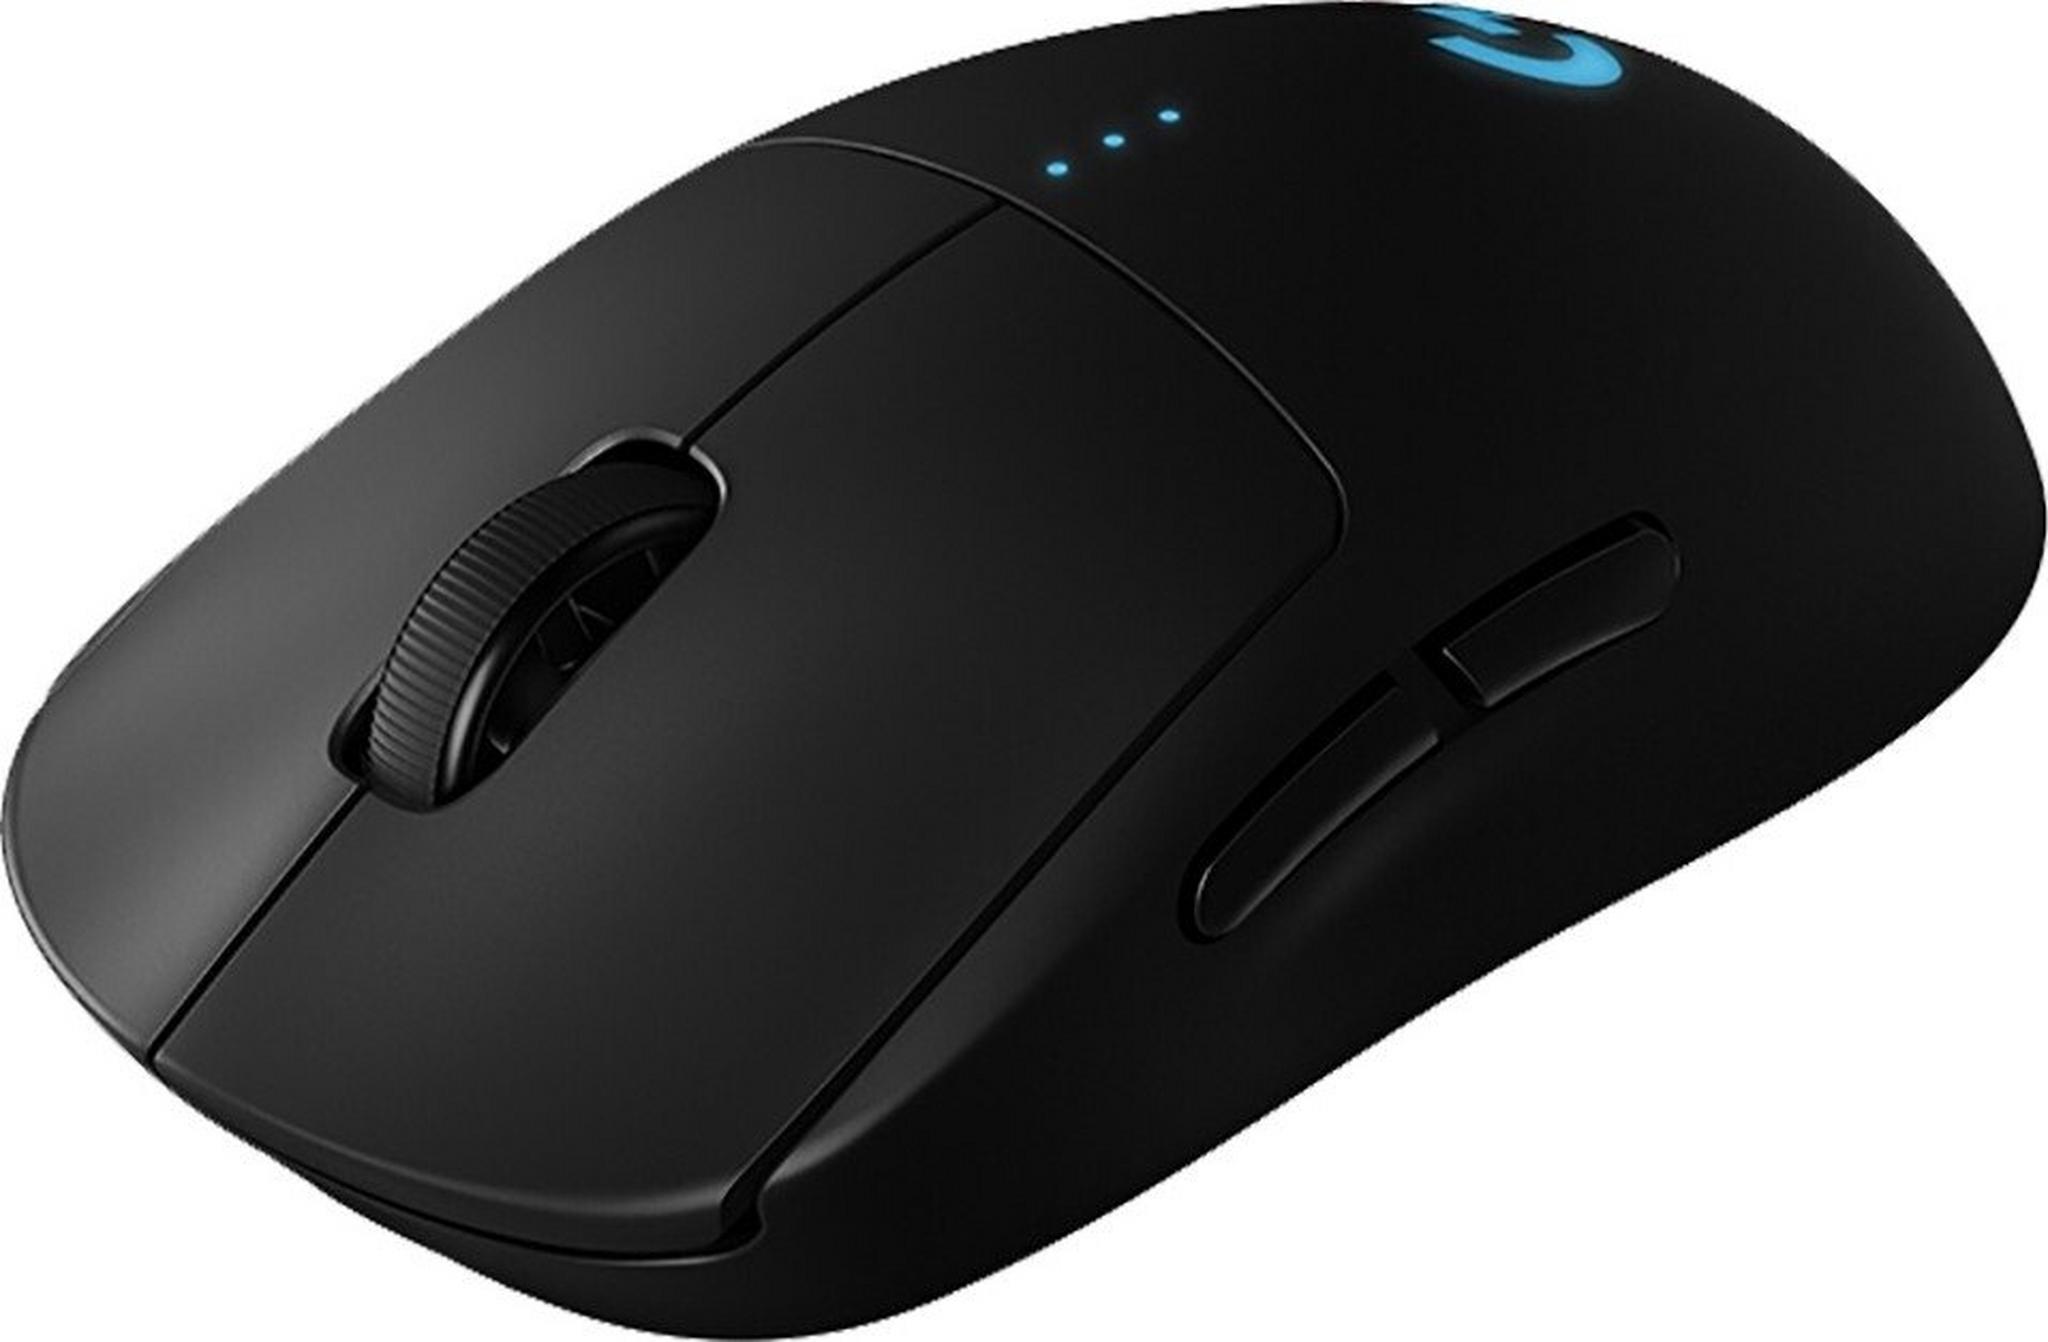 Logitech G Pro Wireless Gaming Mouse - Black